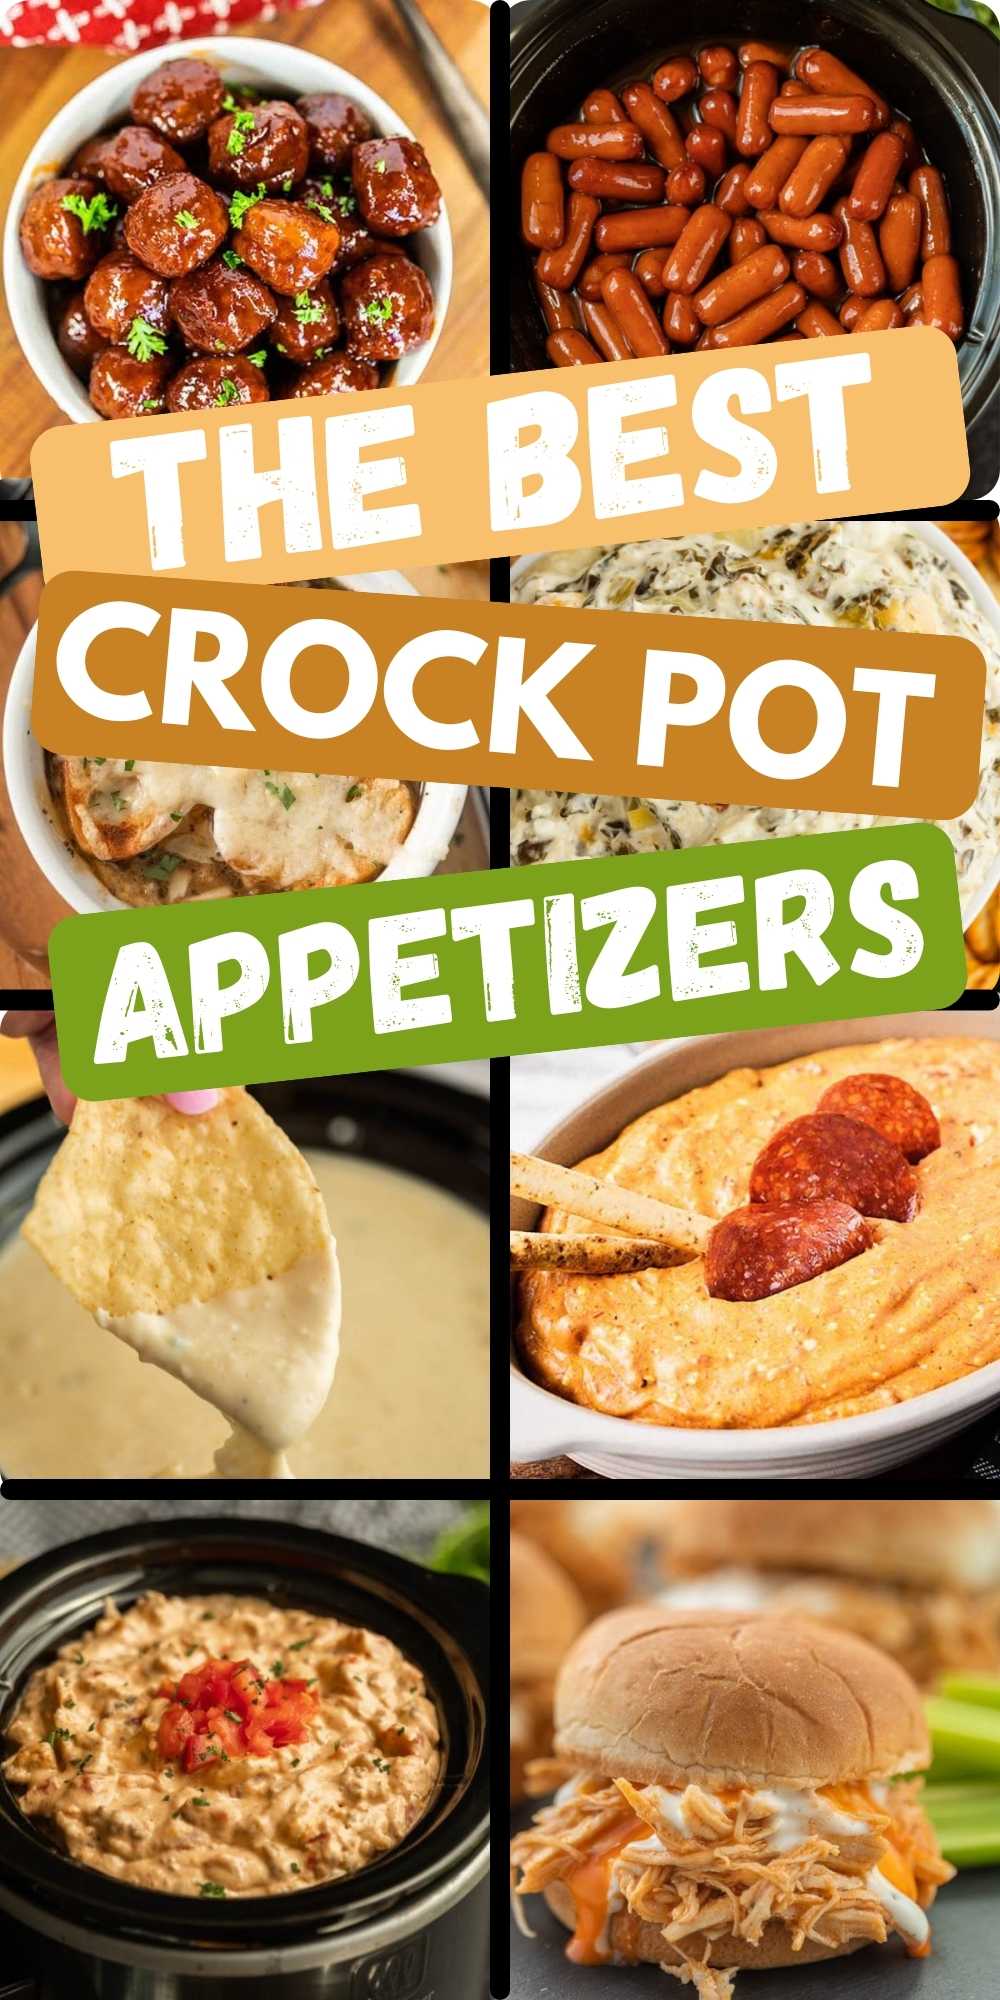 Crock Pot Appetizers - 25 of the Best Crockpot Appetizers